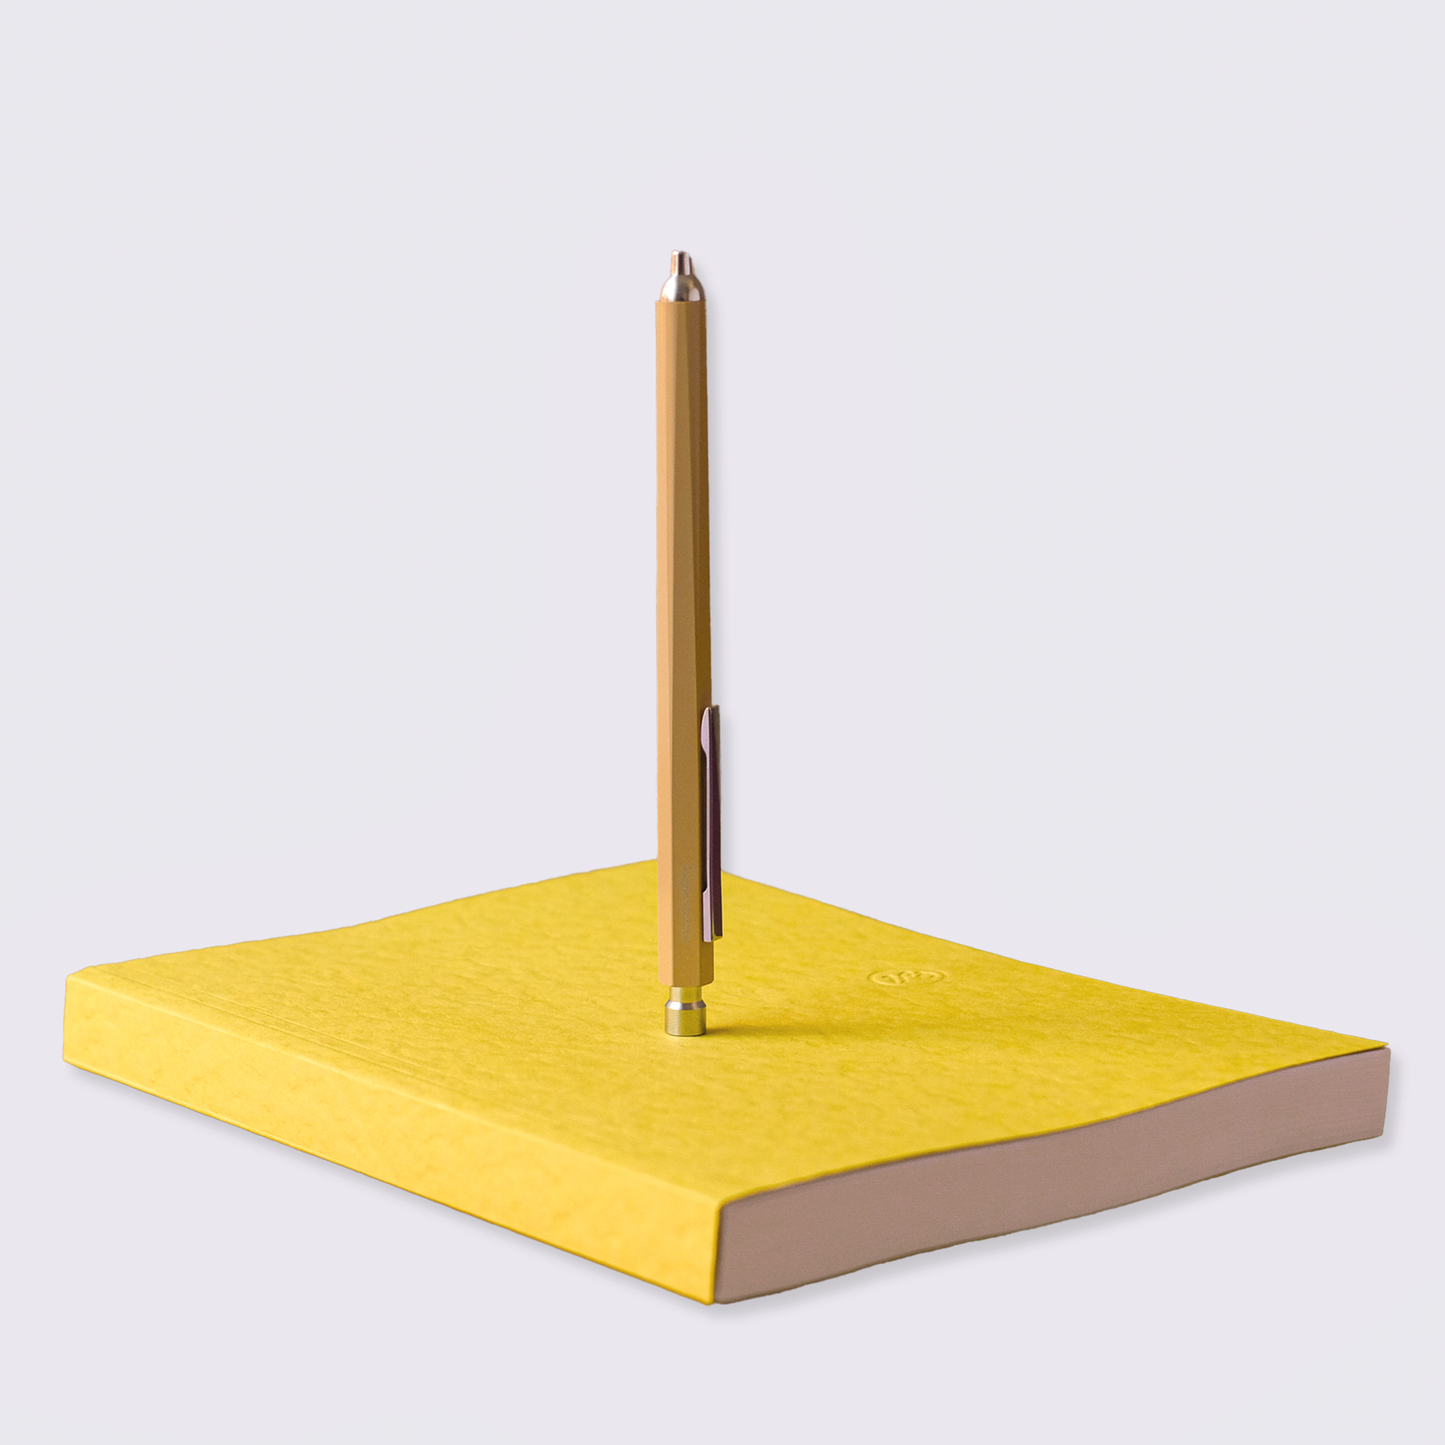 Limoncello Notebook and Pen Duo - Primo Ballpoint Pen / Dot Grid Paper